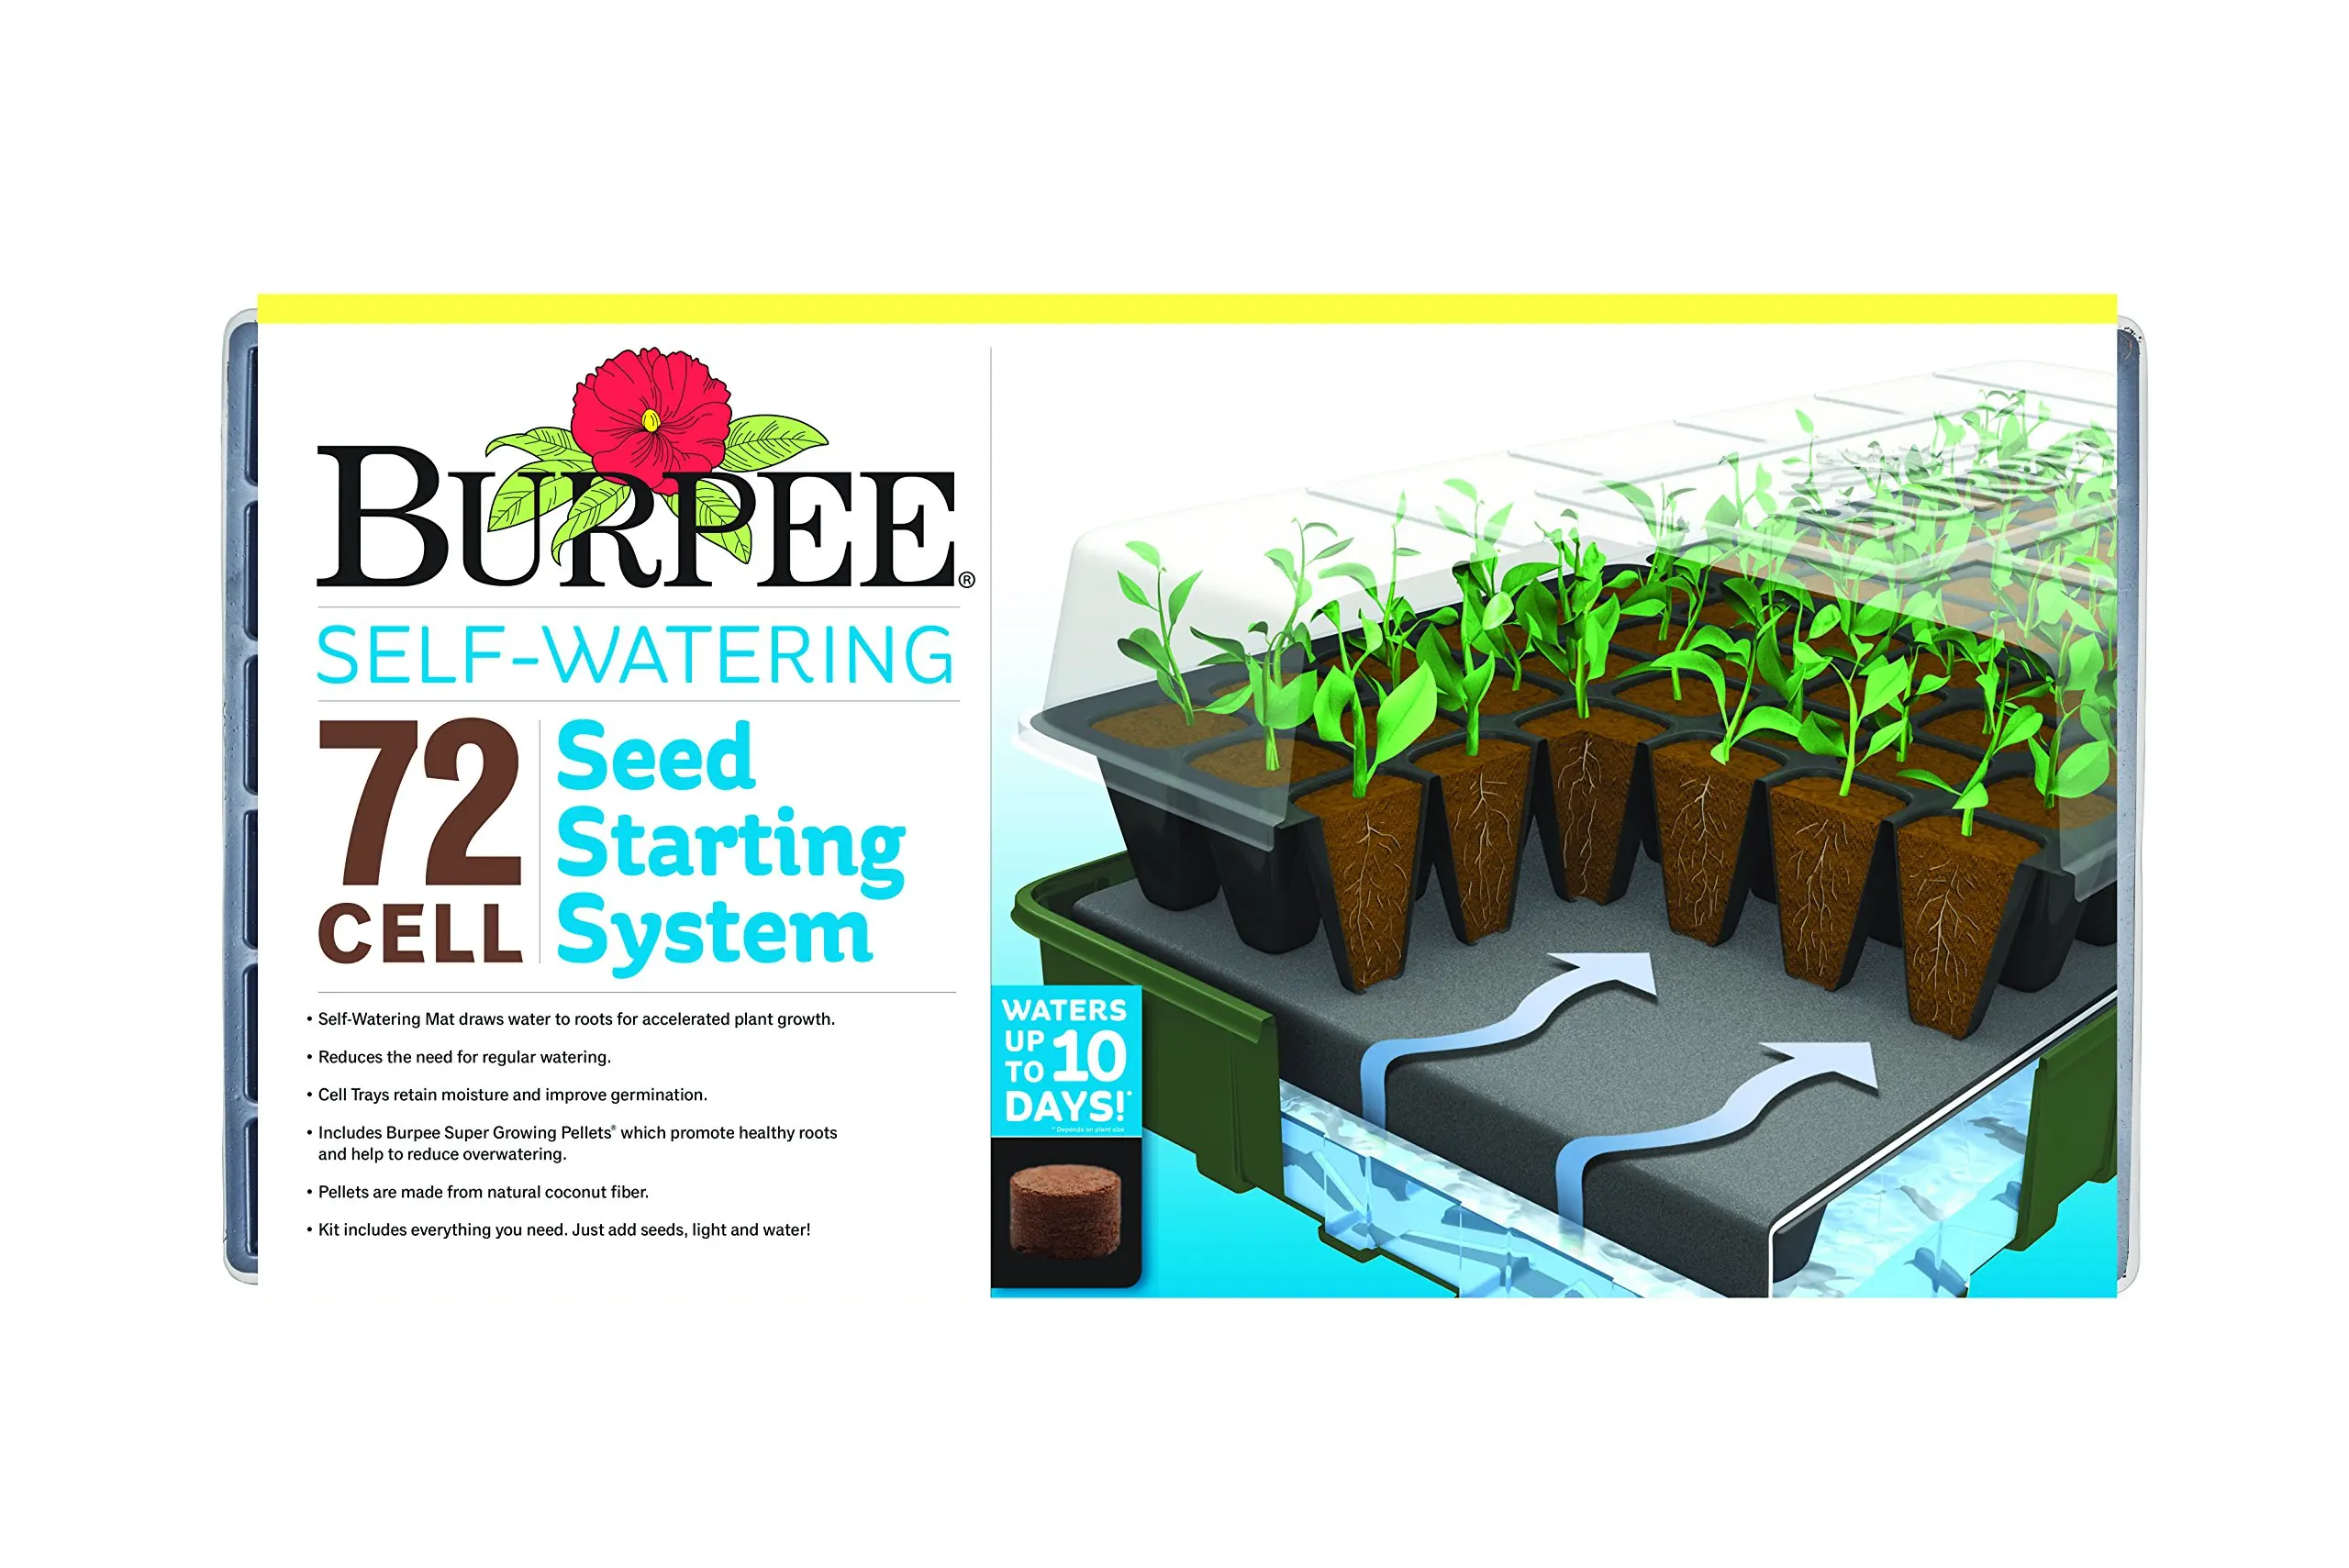 Burpee 72 Cell Self Watering Seed Starting Kit. 